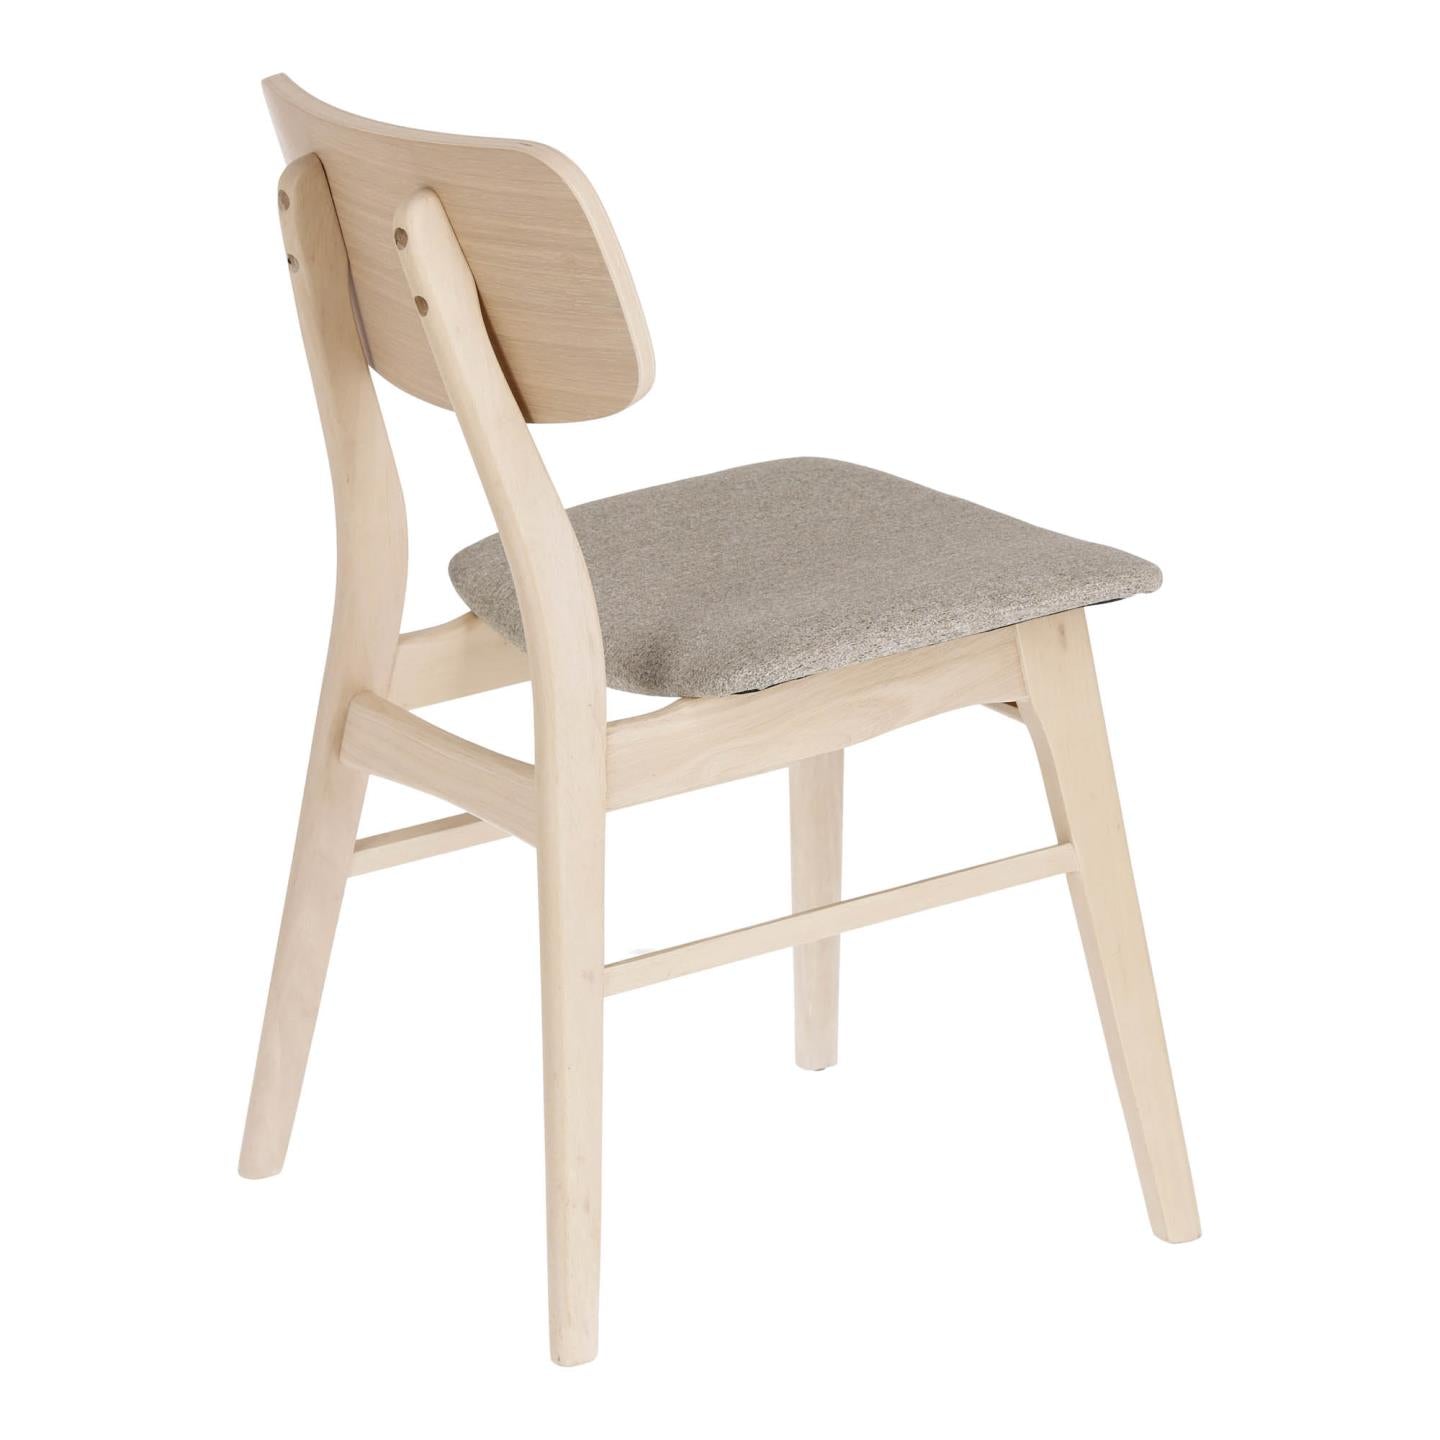 Selia chair in solid rubber wood, oak veneer and light grey upholstery